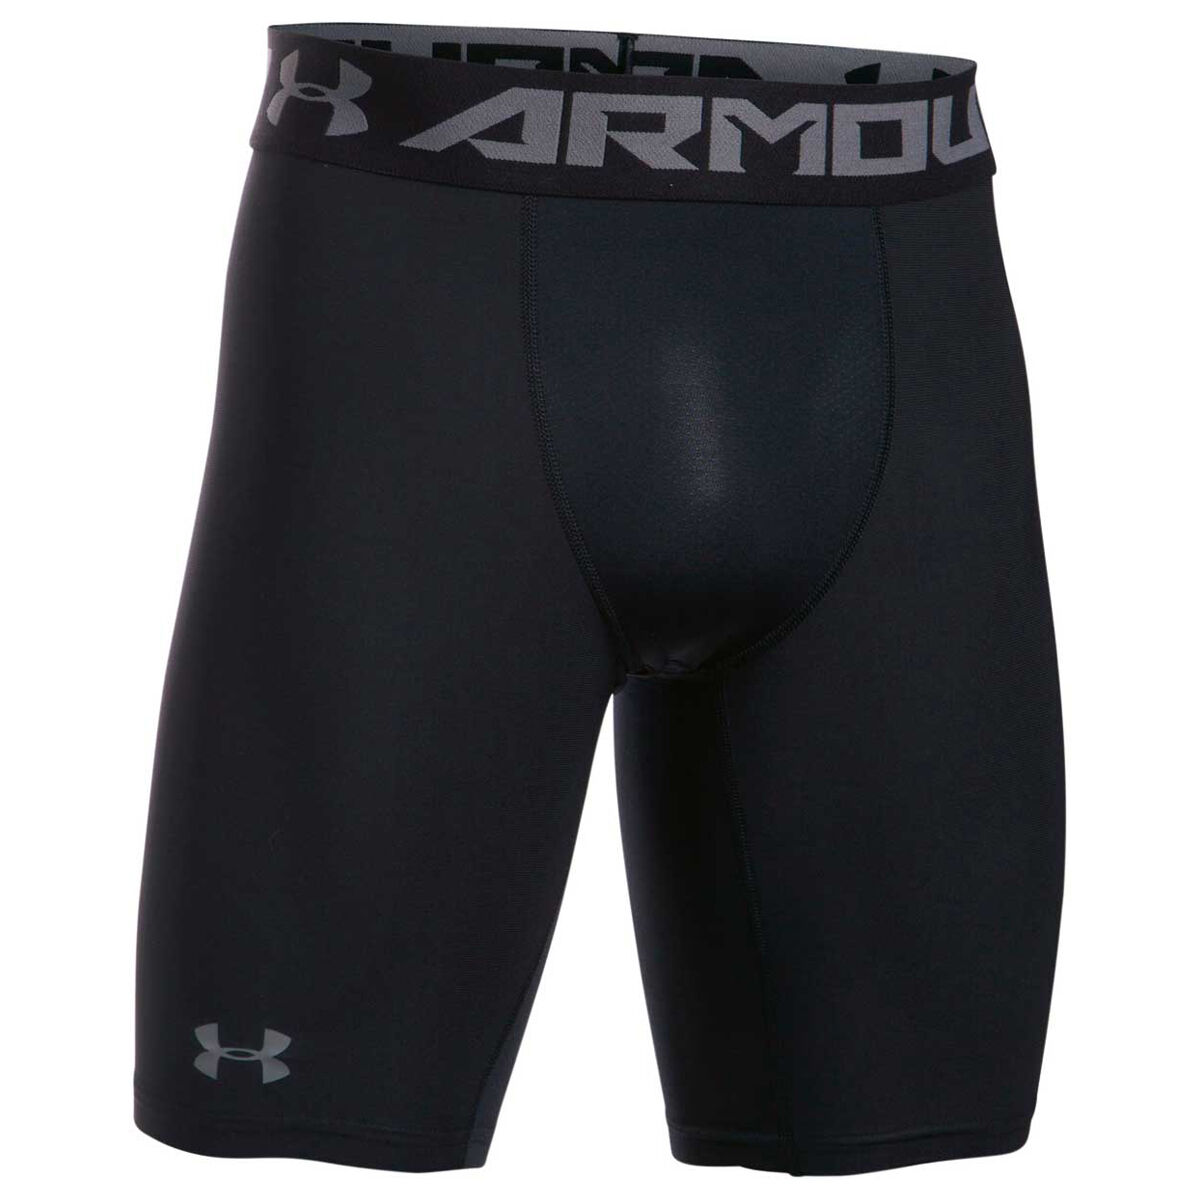 4xl under armour compression shorts